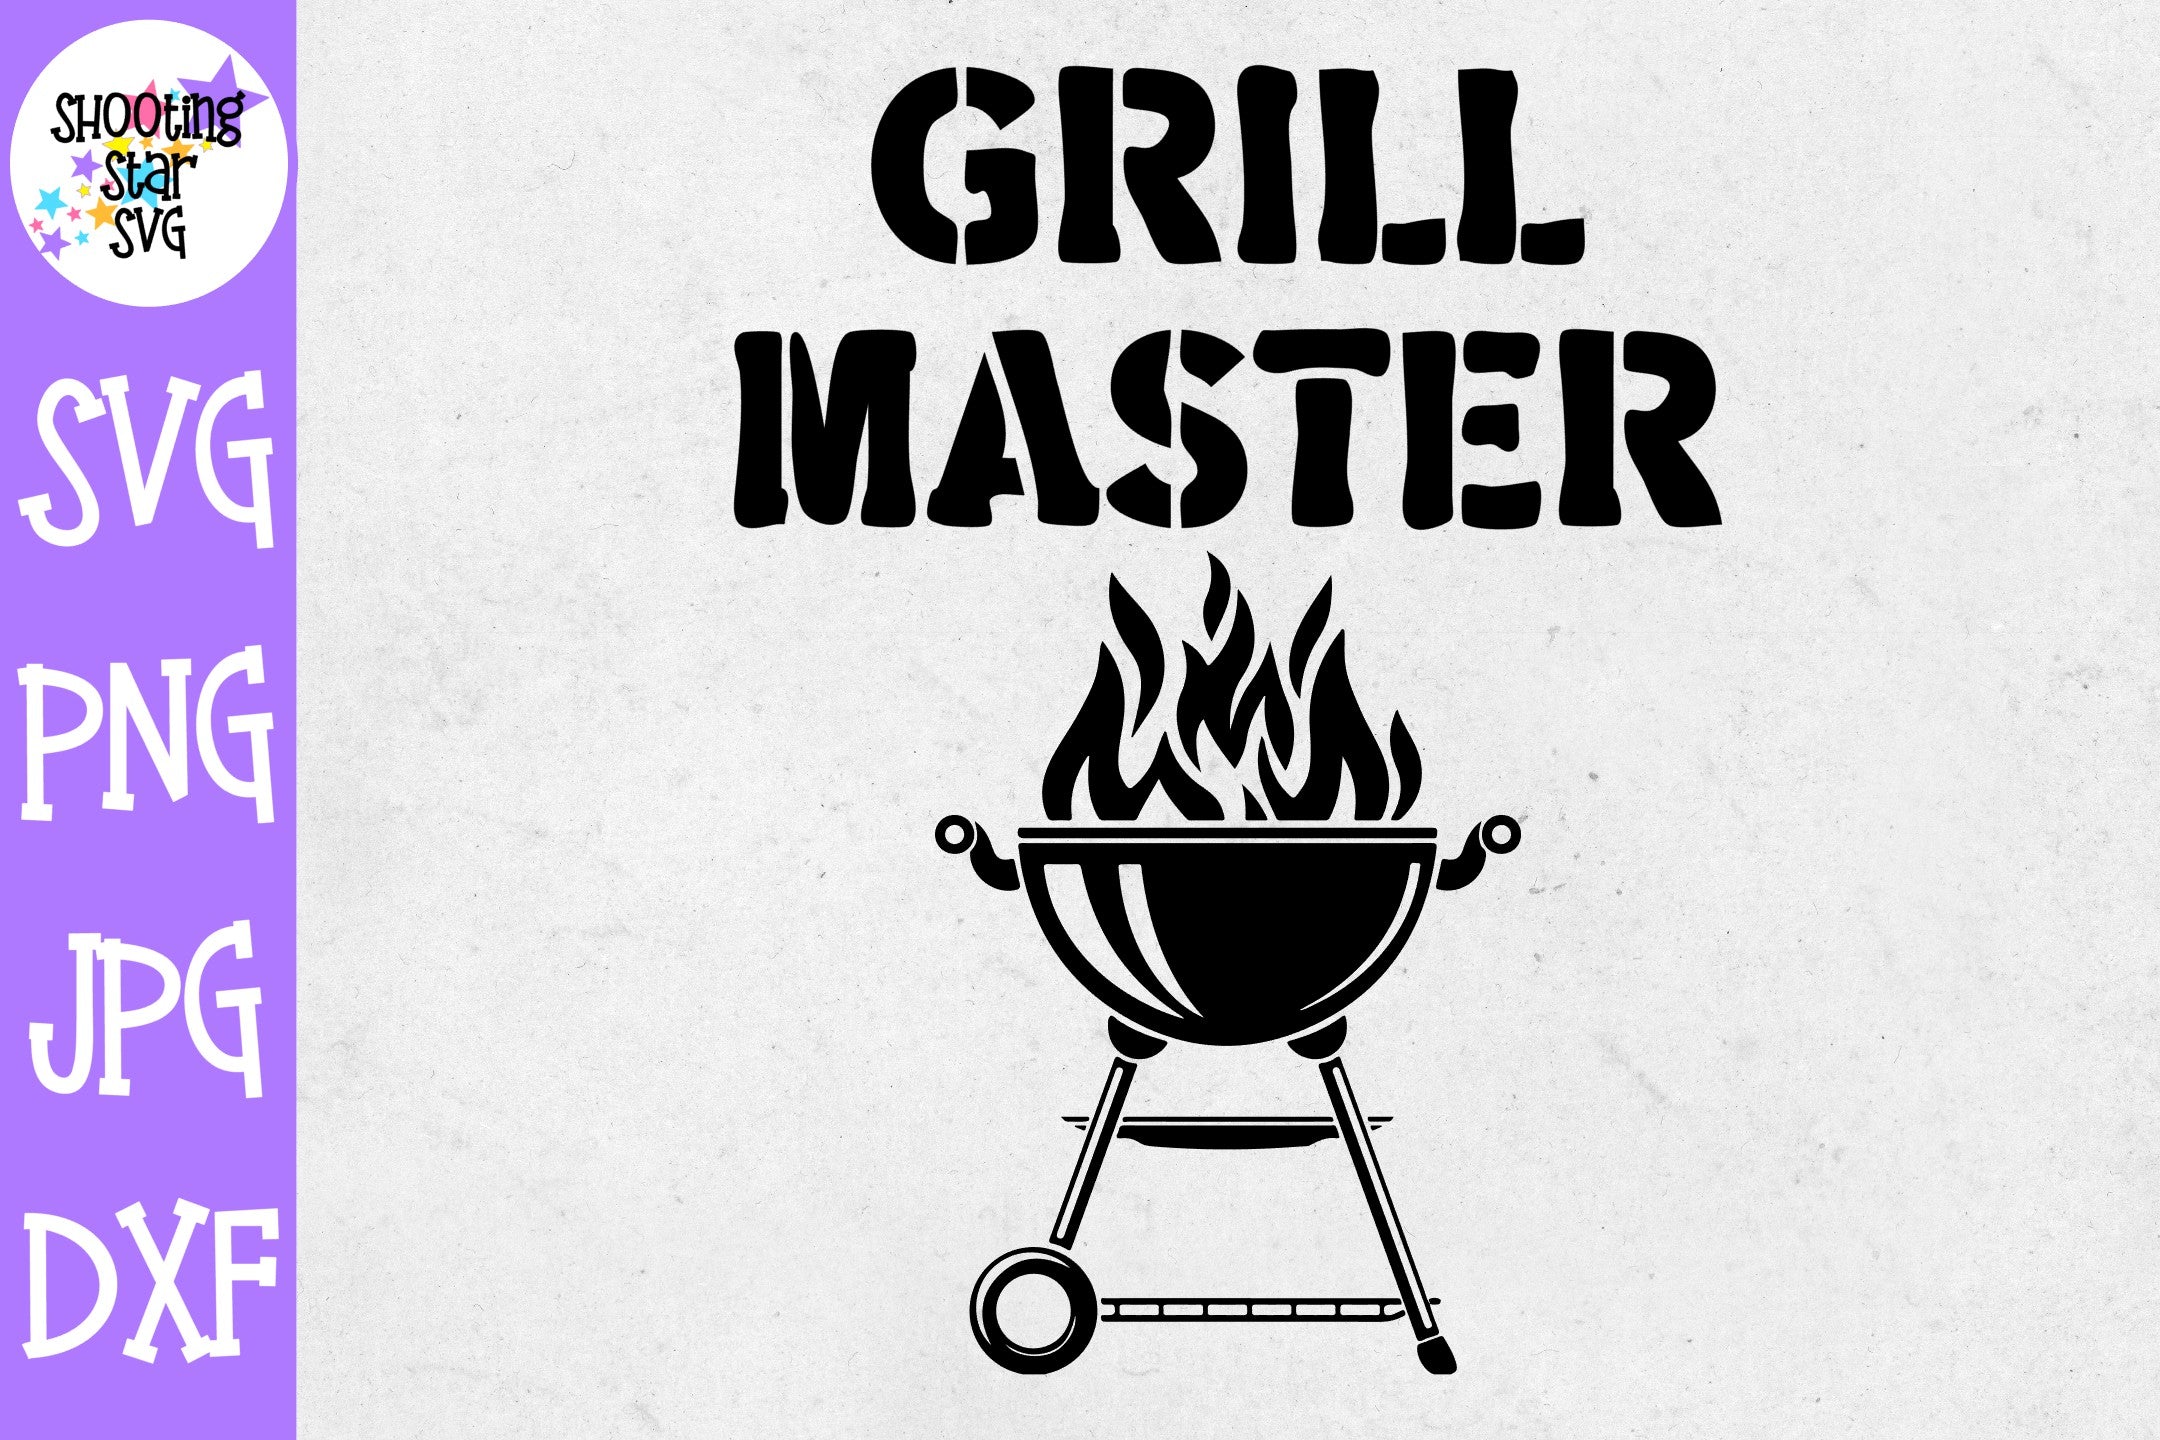 BBQ Timer SVG, Grill Master svg, Clipart for Cricut, Funny Grill Saying  svg, Bbq Beer svg, Grill Dad svg | Vector Cut File, Digital download